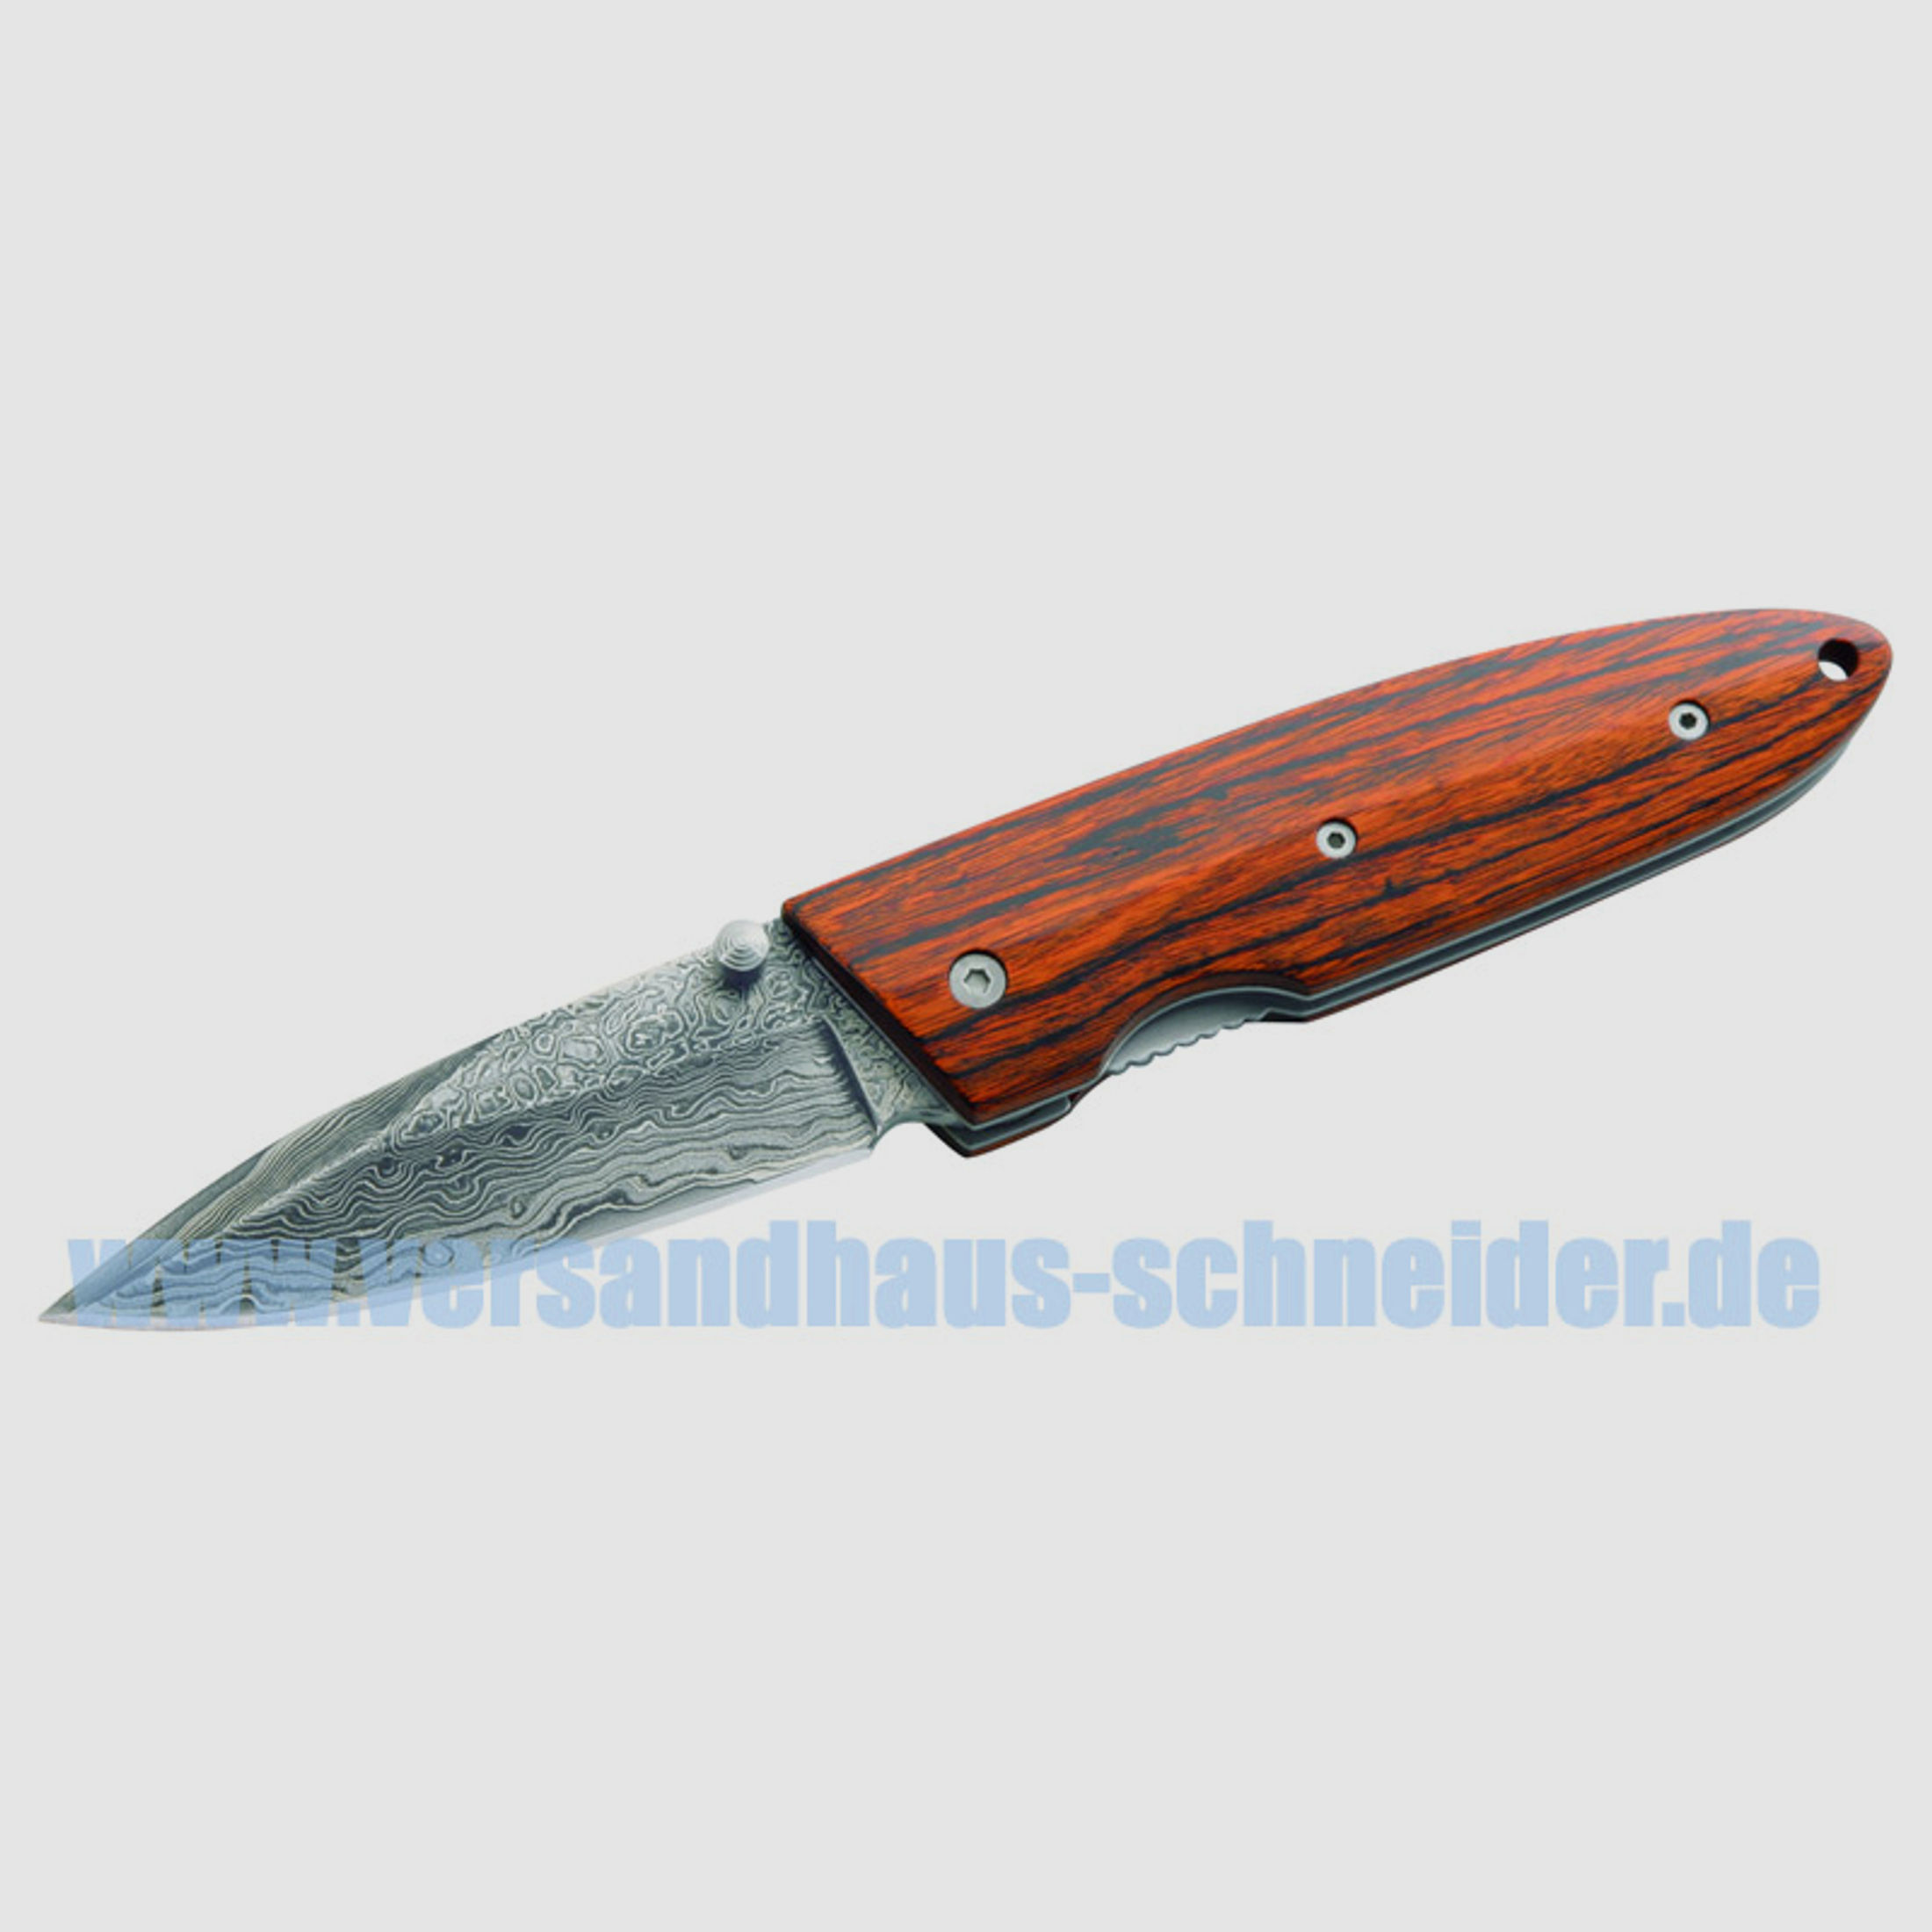 Einhandmesser Herbertz Damast 35 Lagen Stahl 440C KlingenlĂ¤nge 8 cm (P18)